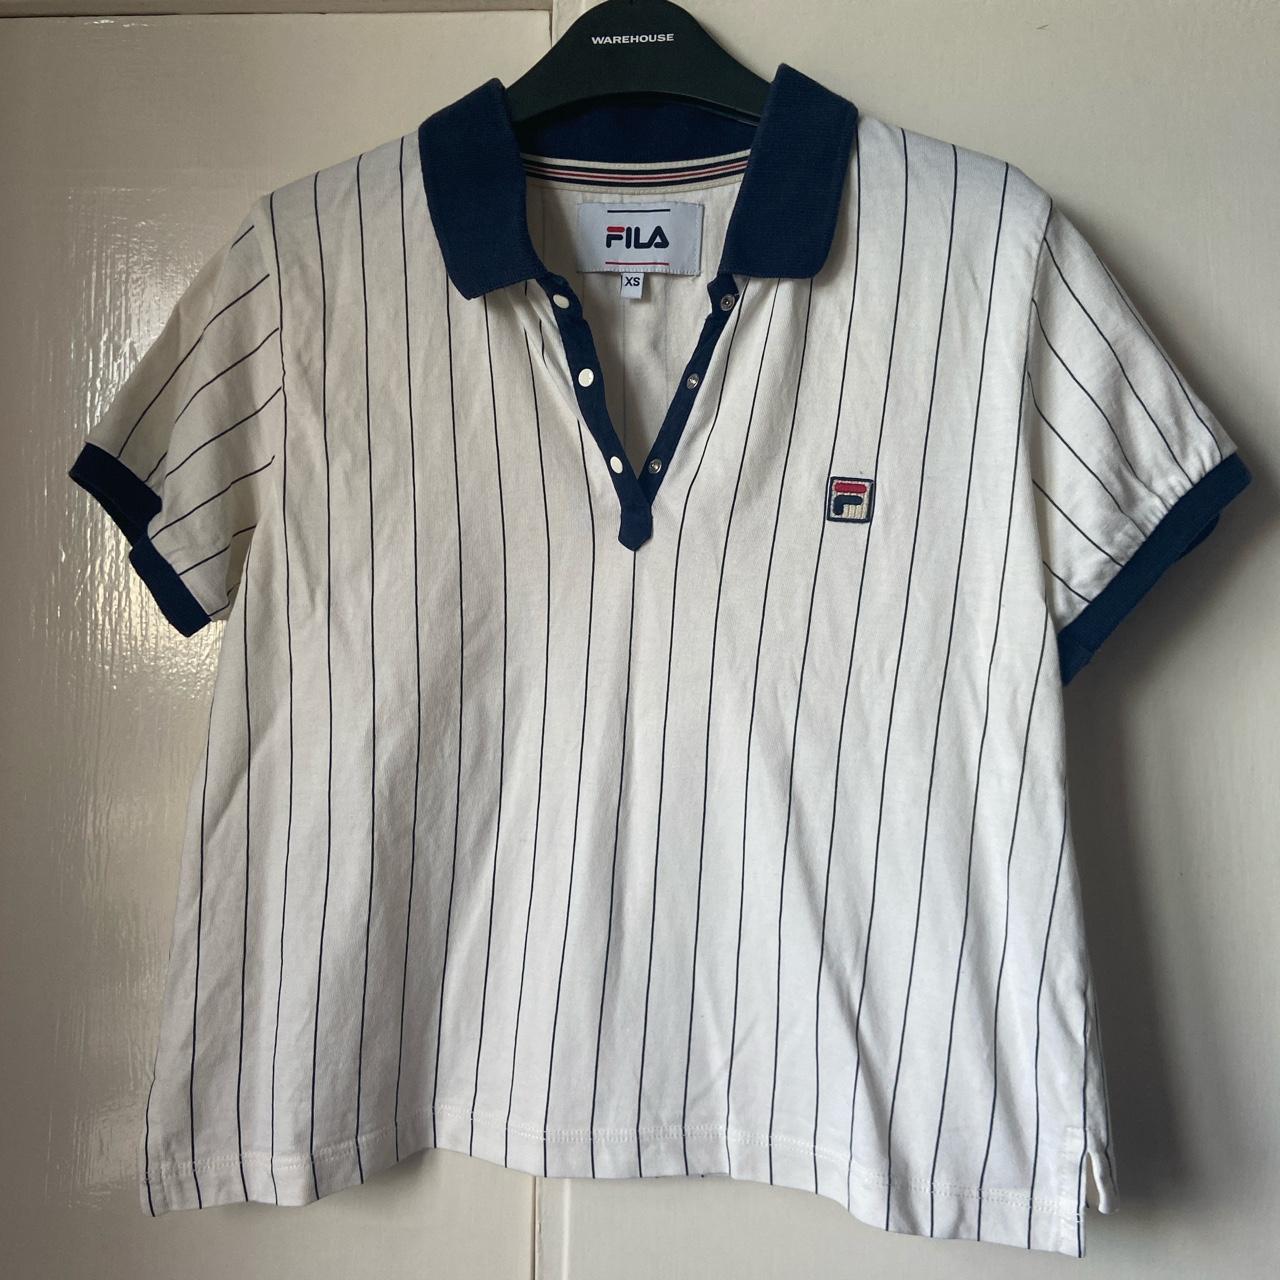 FILA - Vintage tennis/golf style cropped polo shirt....